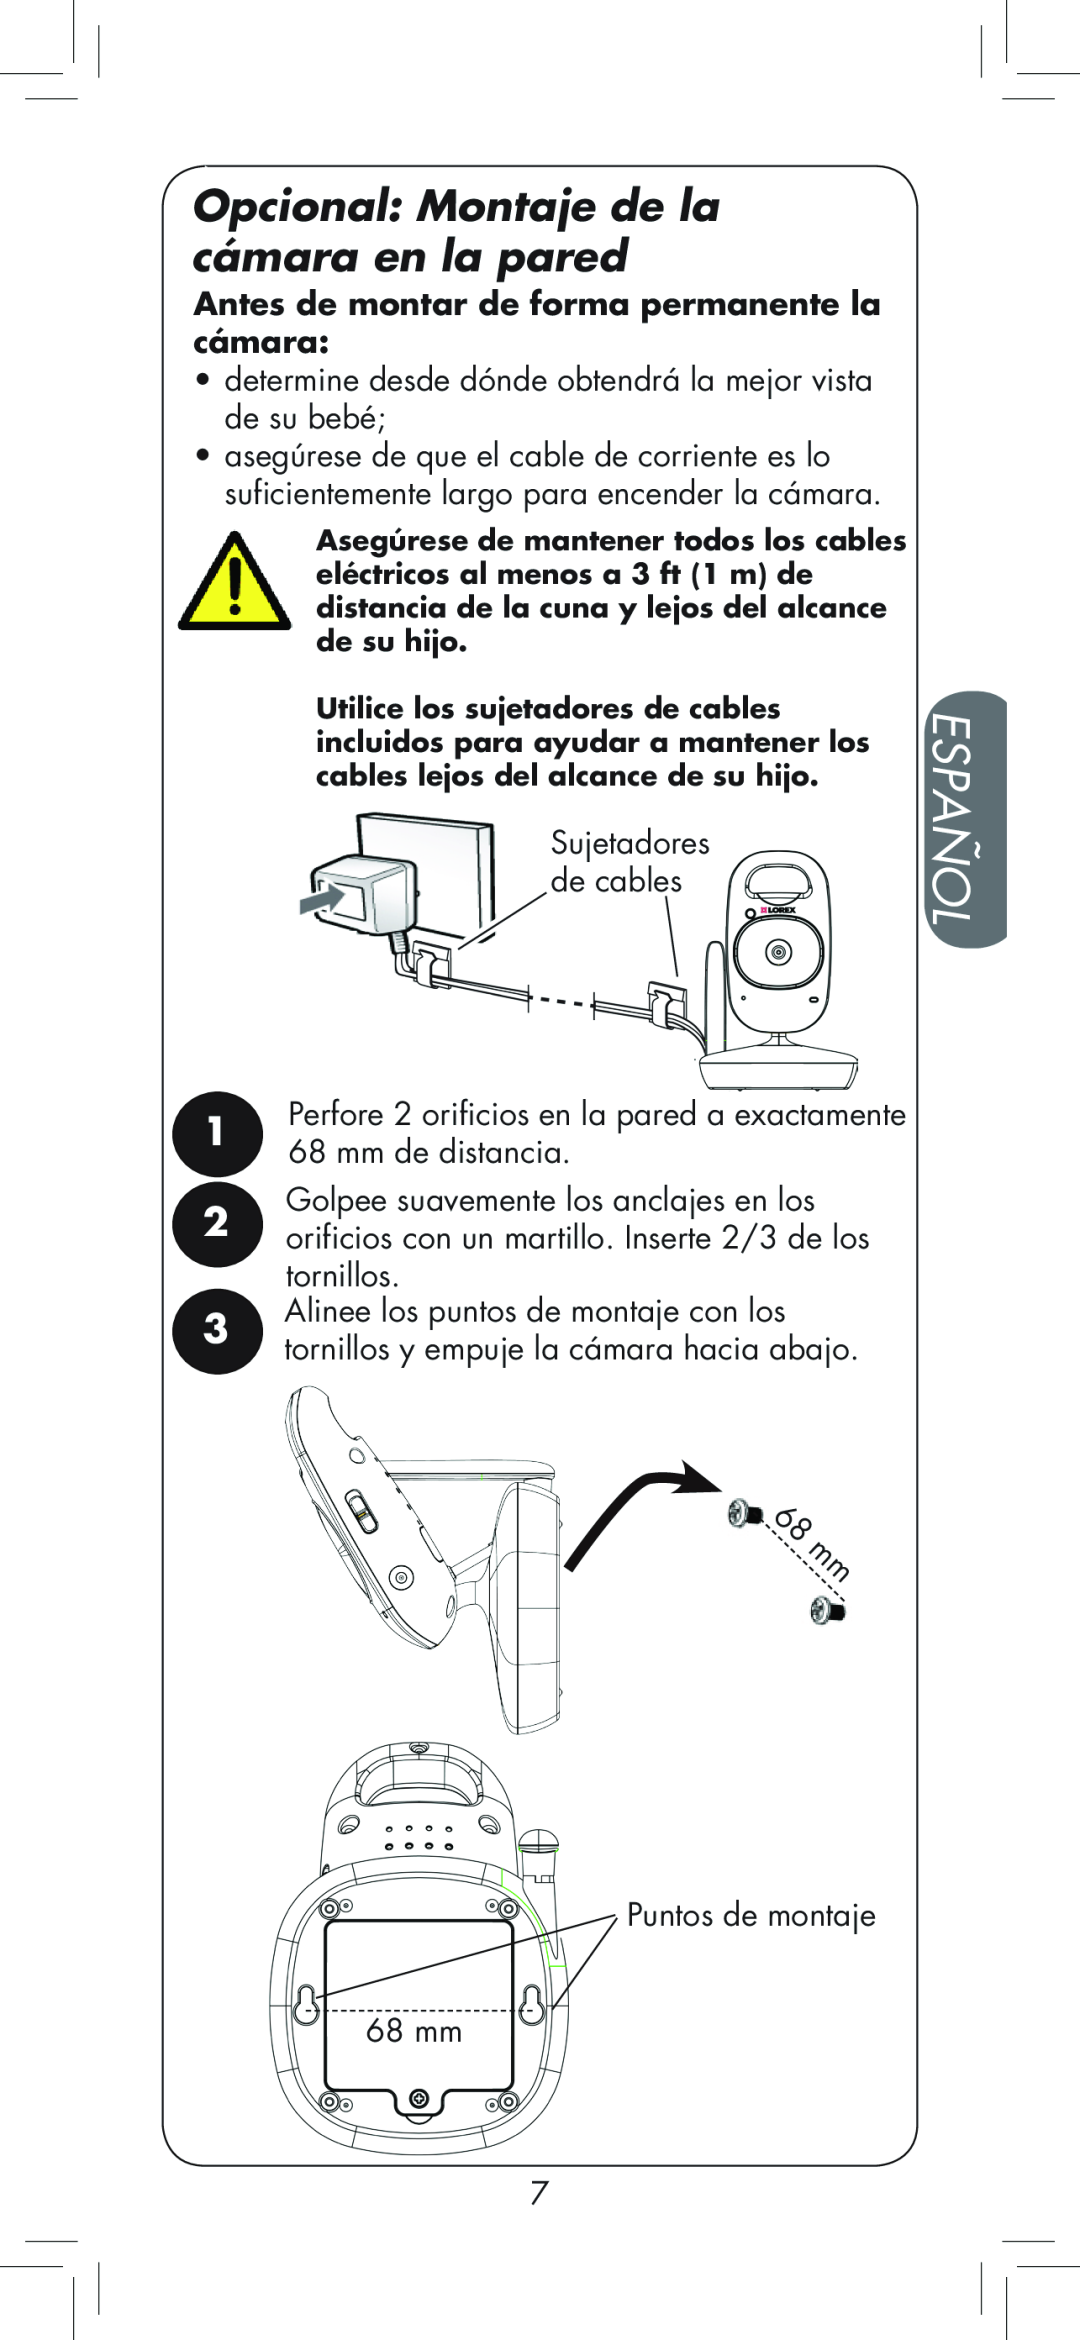 LOREX Technology BB2411 manual Opcional: Montaje de la cámara en la pared, Español 